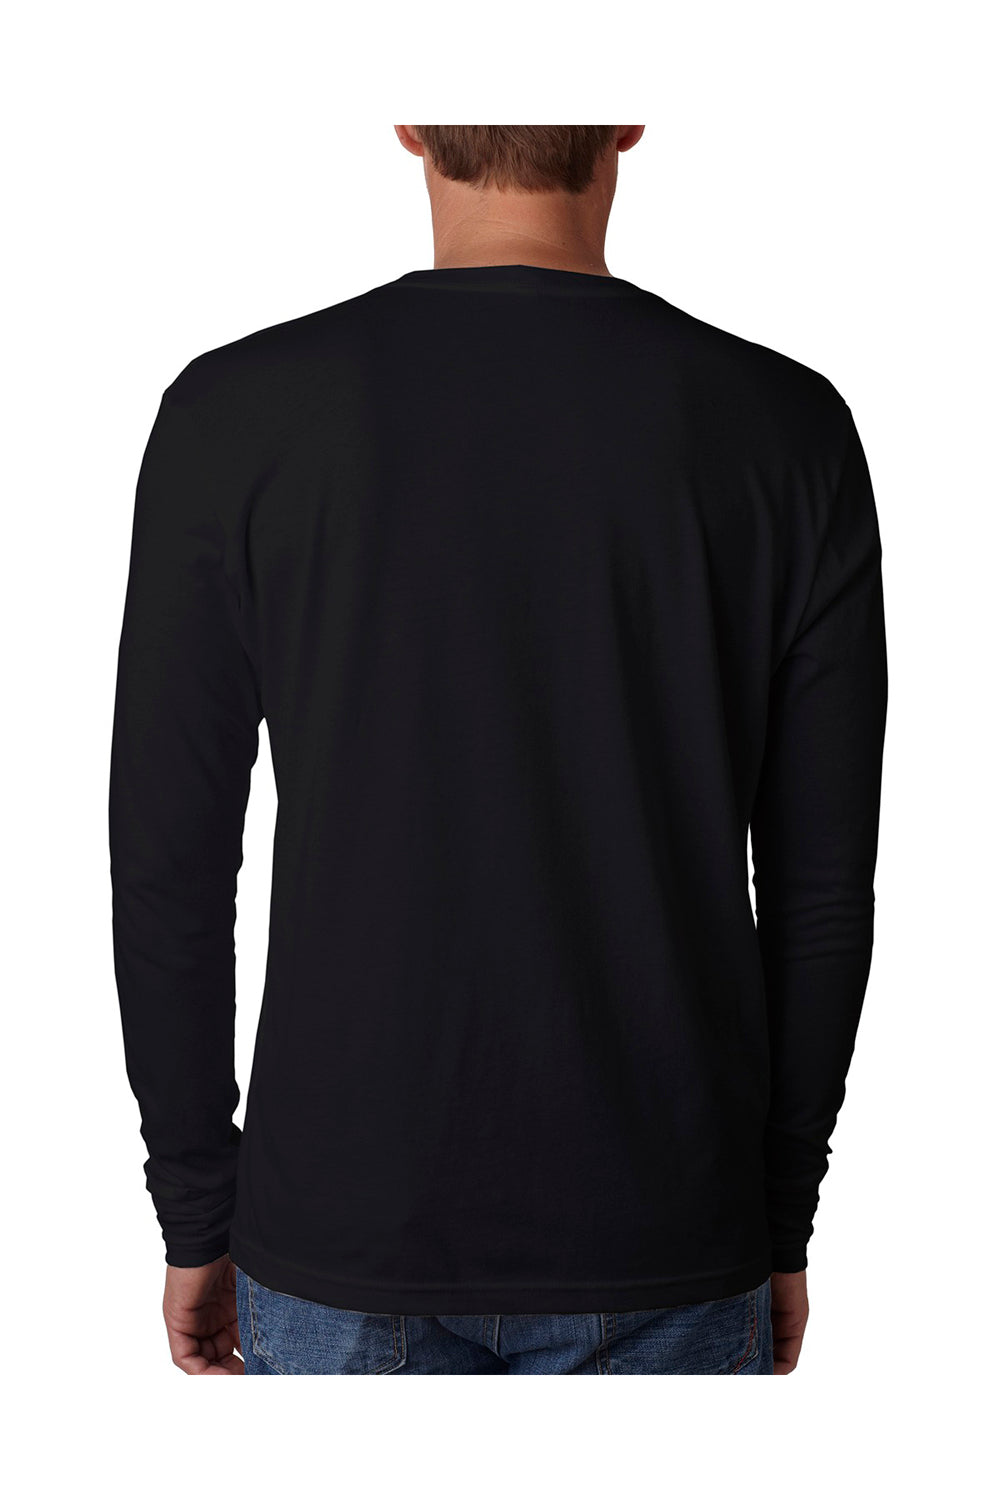 Next Level N3601 Mens Fine Jersey Long Sleeve Crewneck T-Shirt Black Back